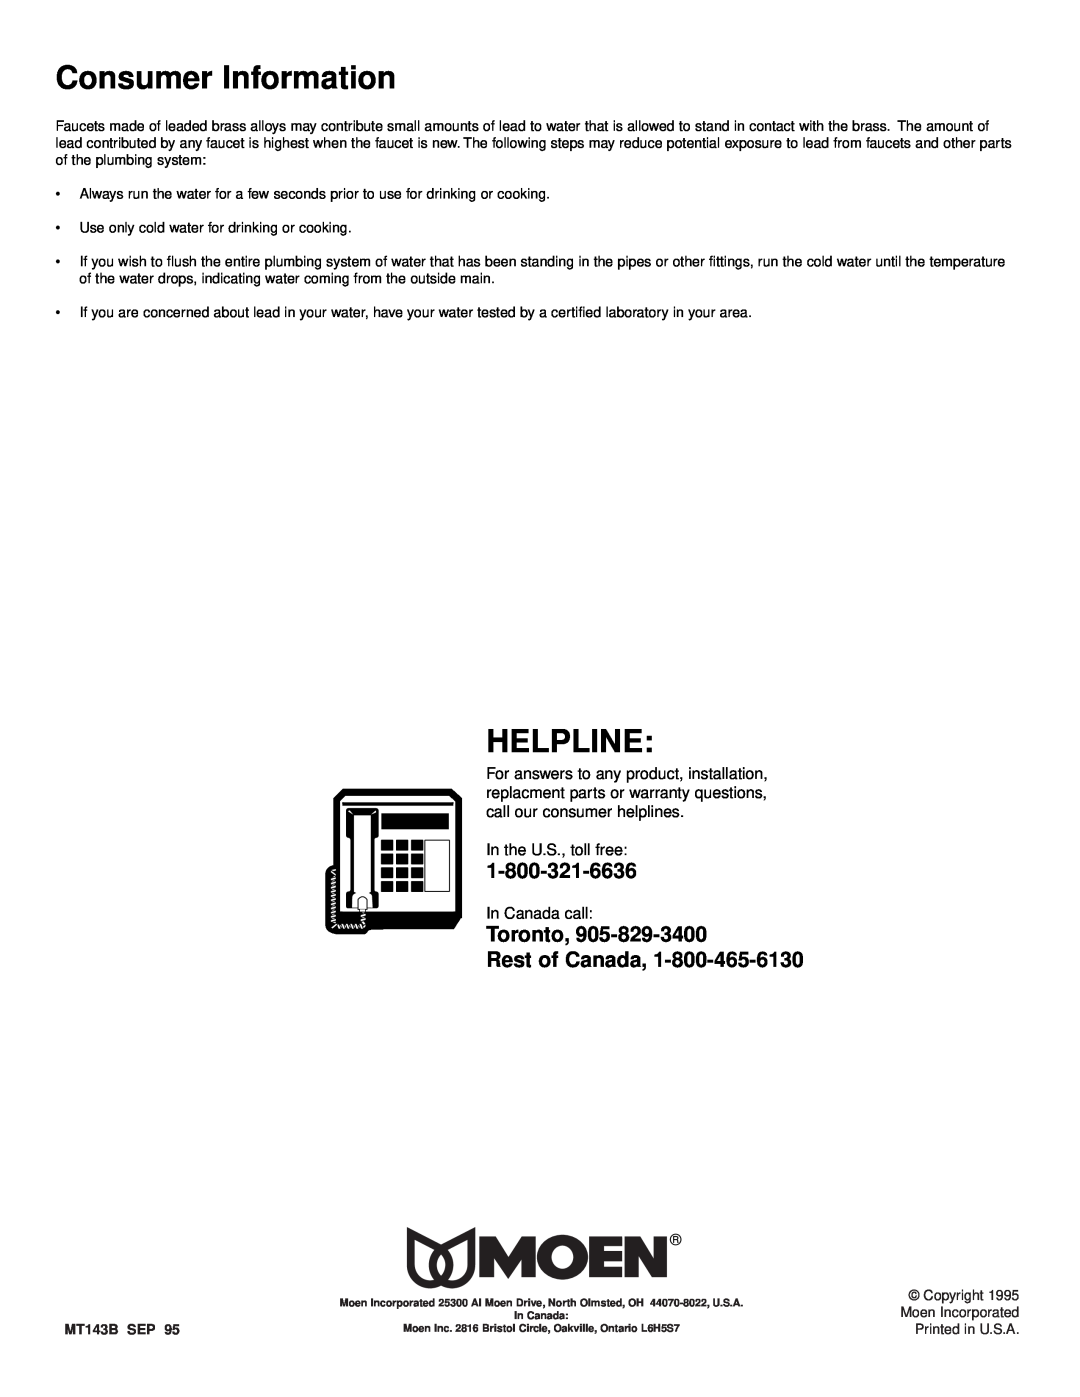 Moen 4934, 8963 installation instructions Toronto Rest of Canada, Consumer Information, Helpline, MT143B SEP 